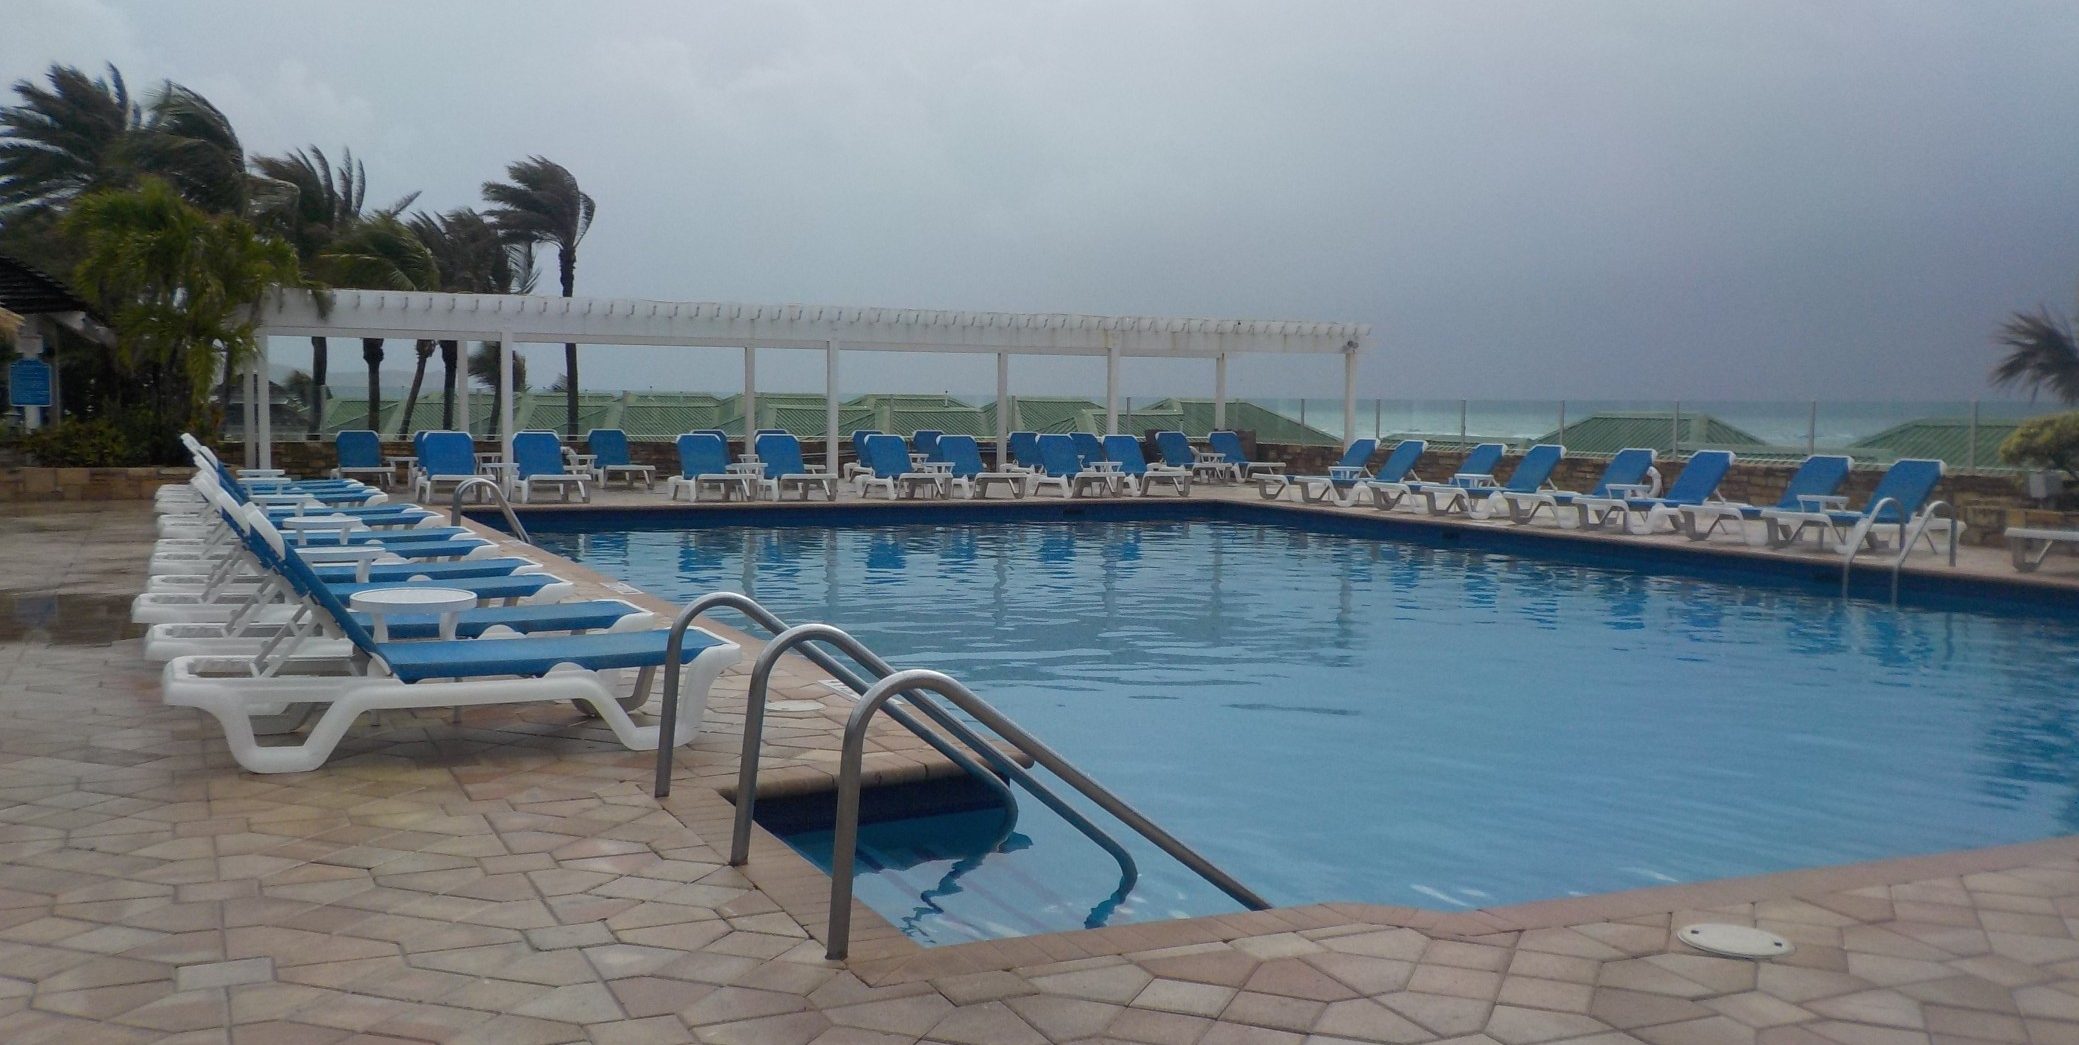 Main swimming pool at St James Club Antigua